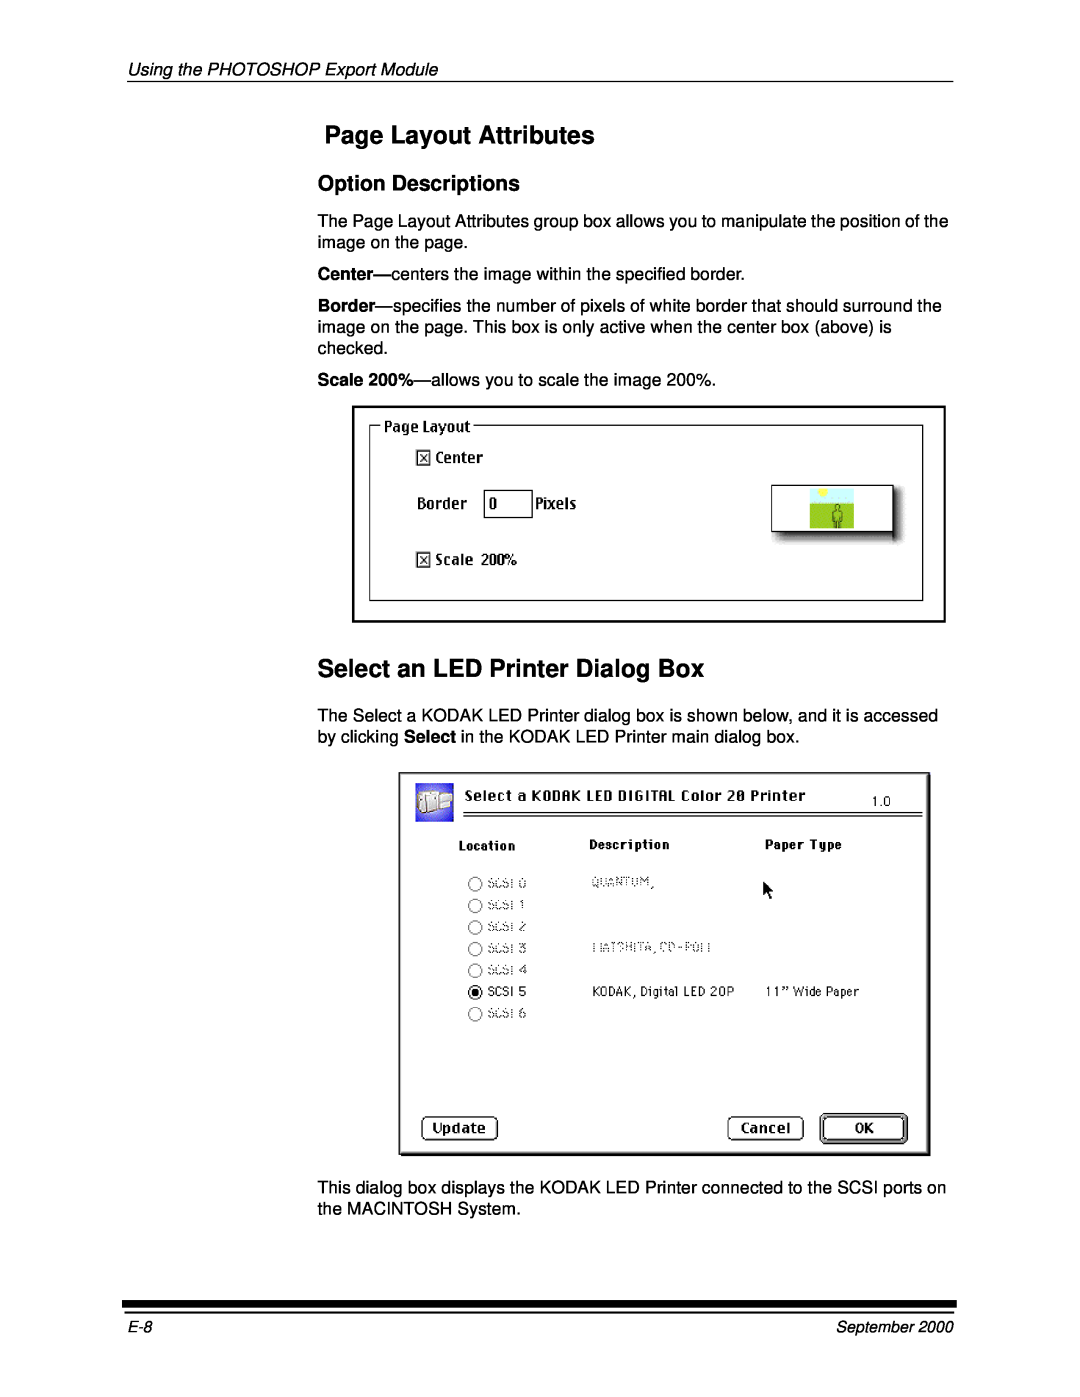 Kodak 20R Page Layout Attributes, Select an LED Printer Dialog Box, Option Descriptions, Using the PHOTOSHOP Export Module 